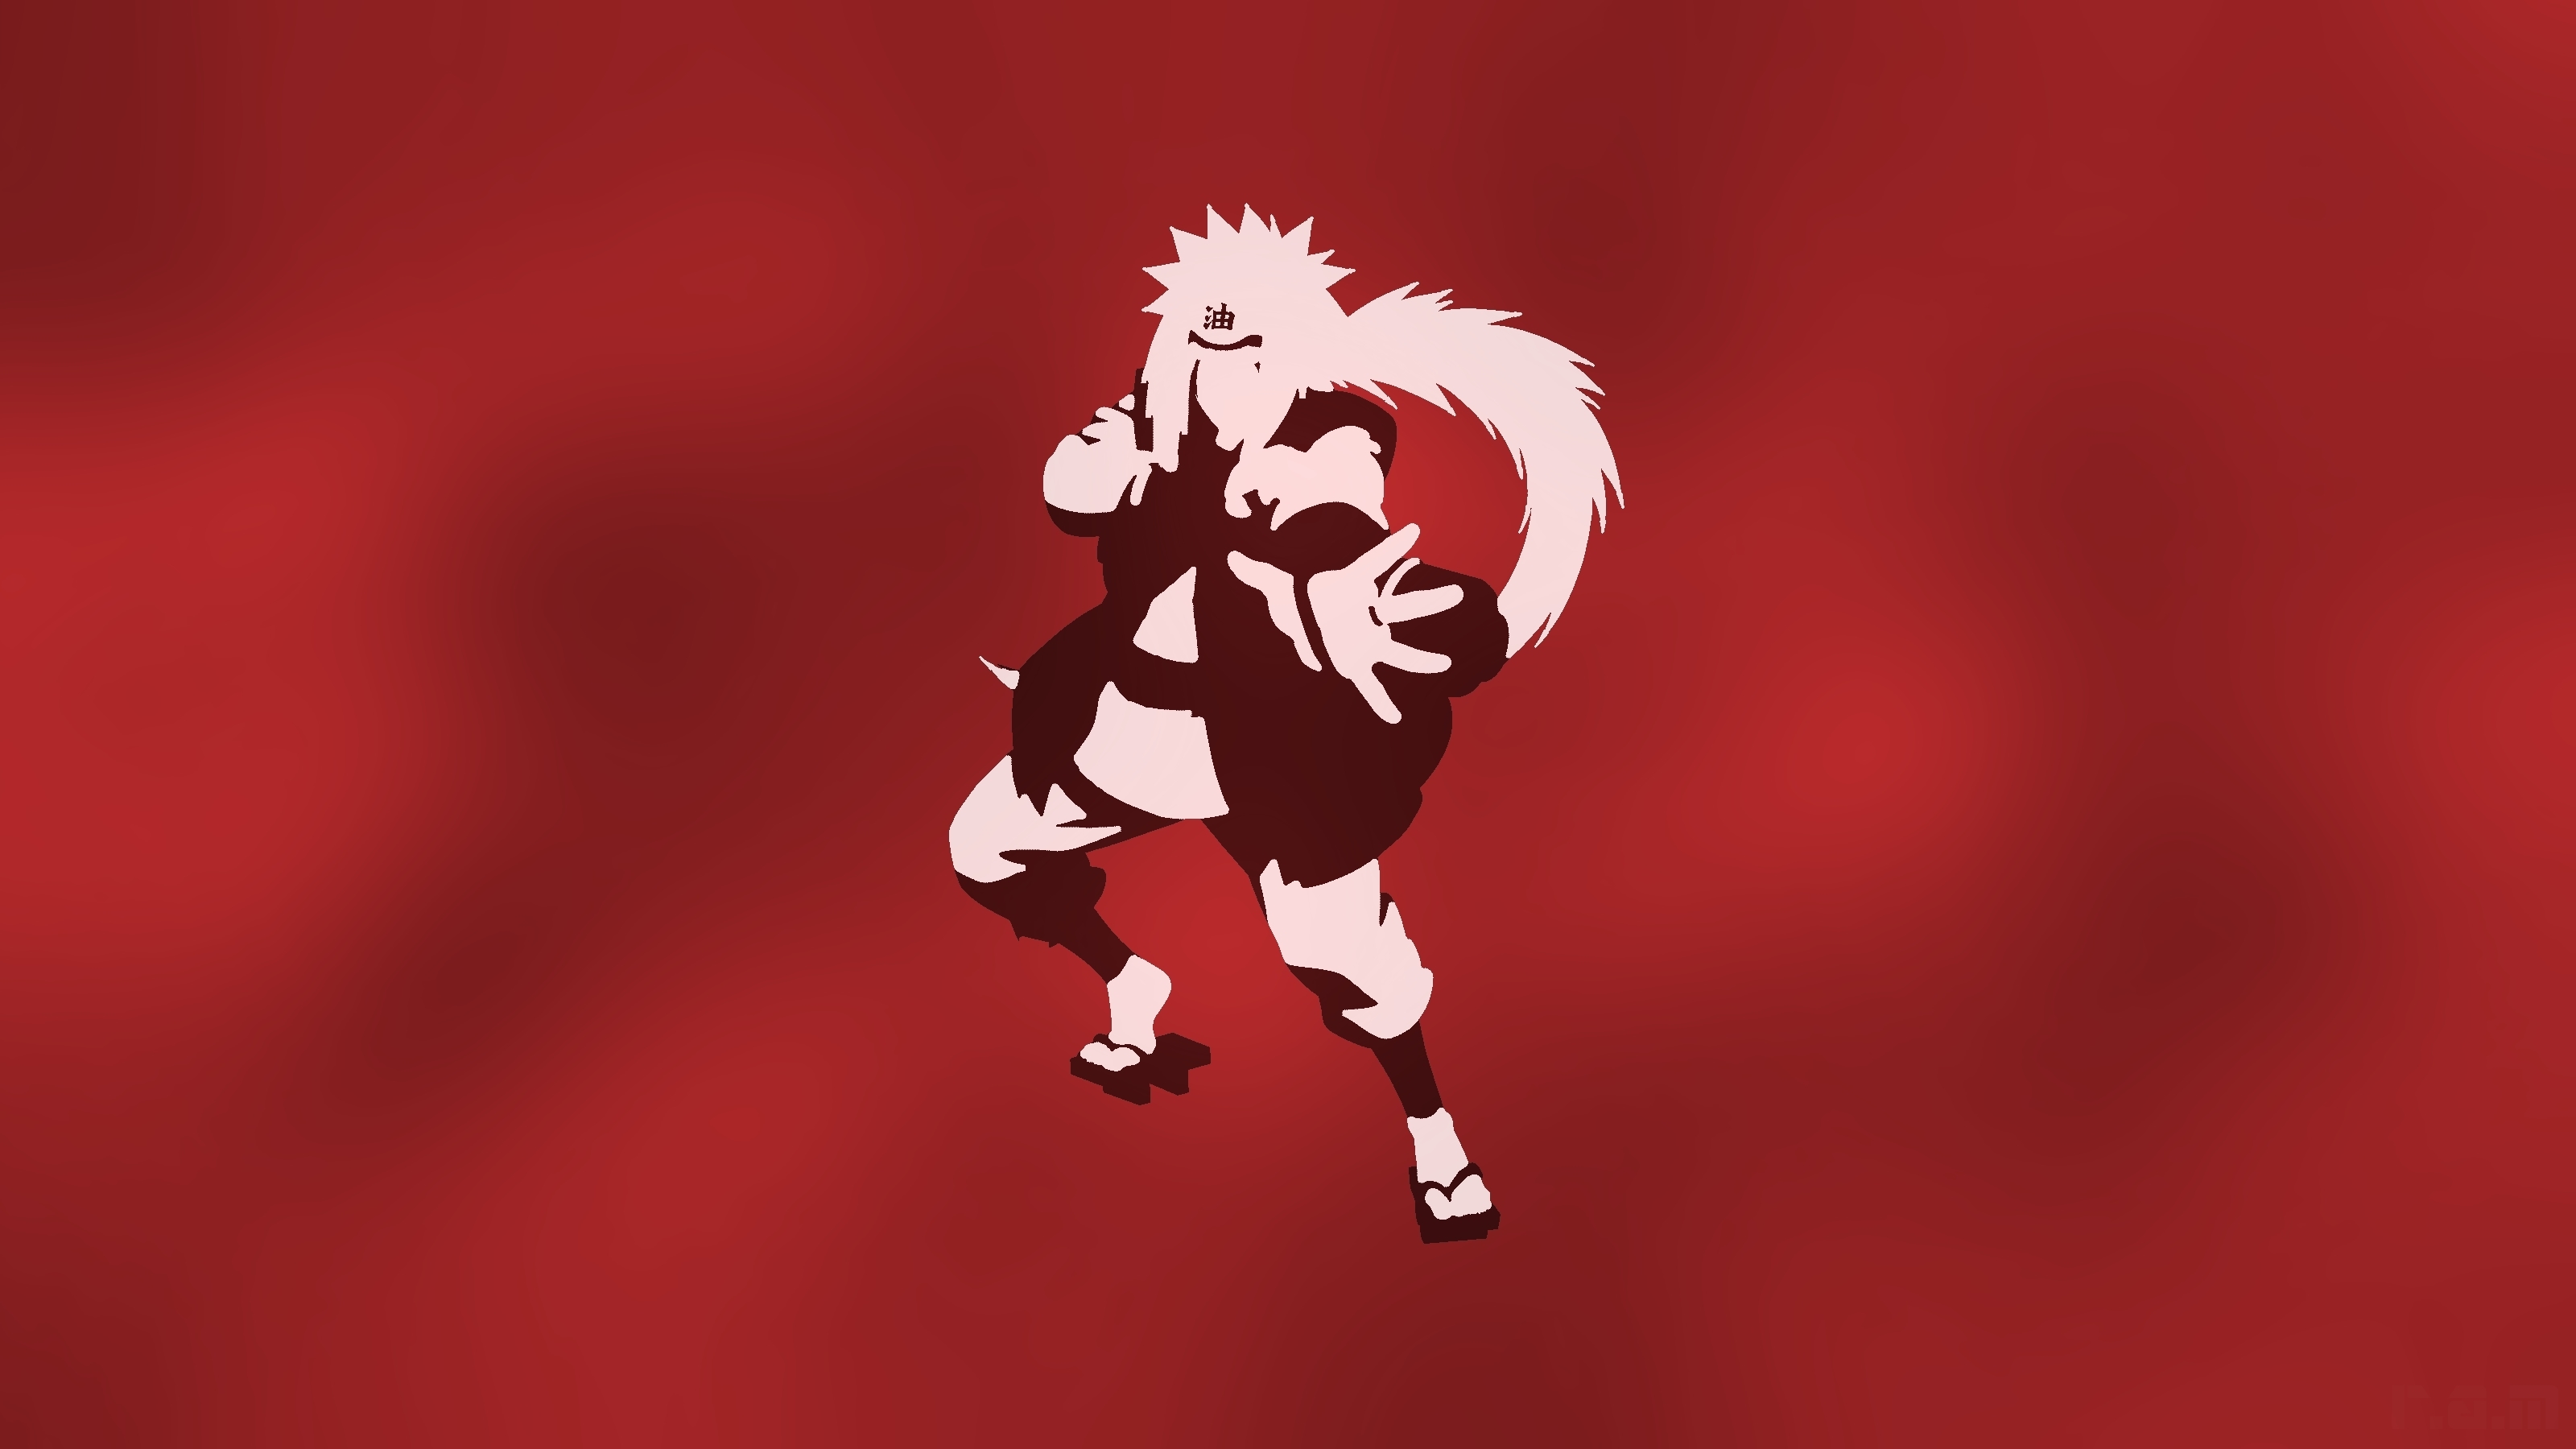 Jiraiya Naruto Red 3200x1800